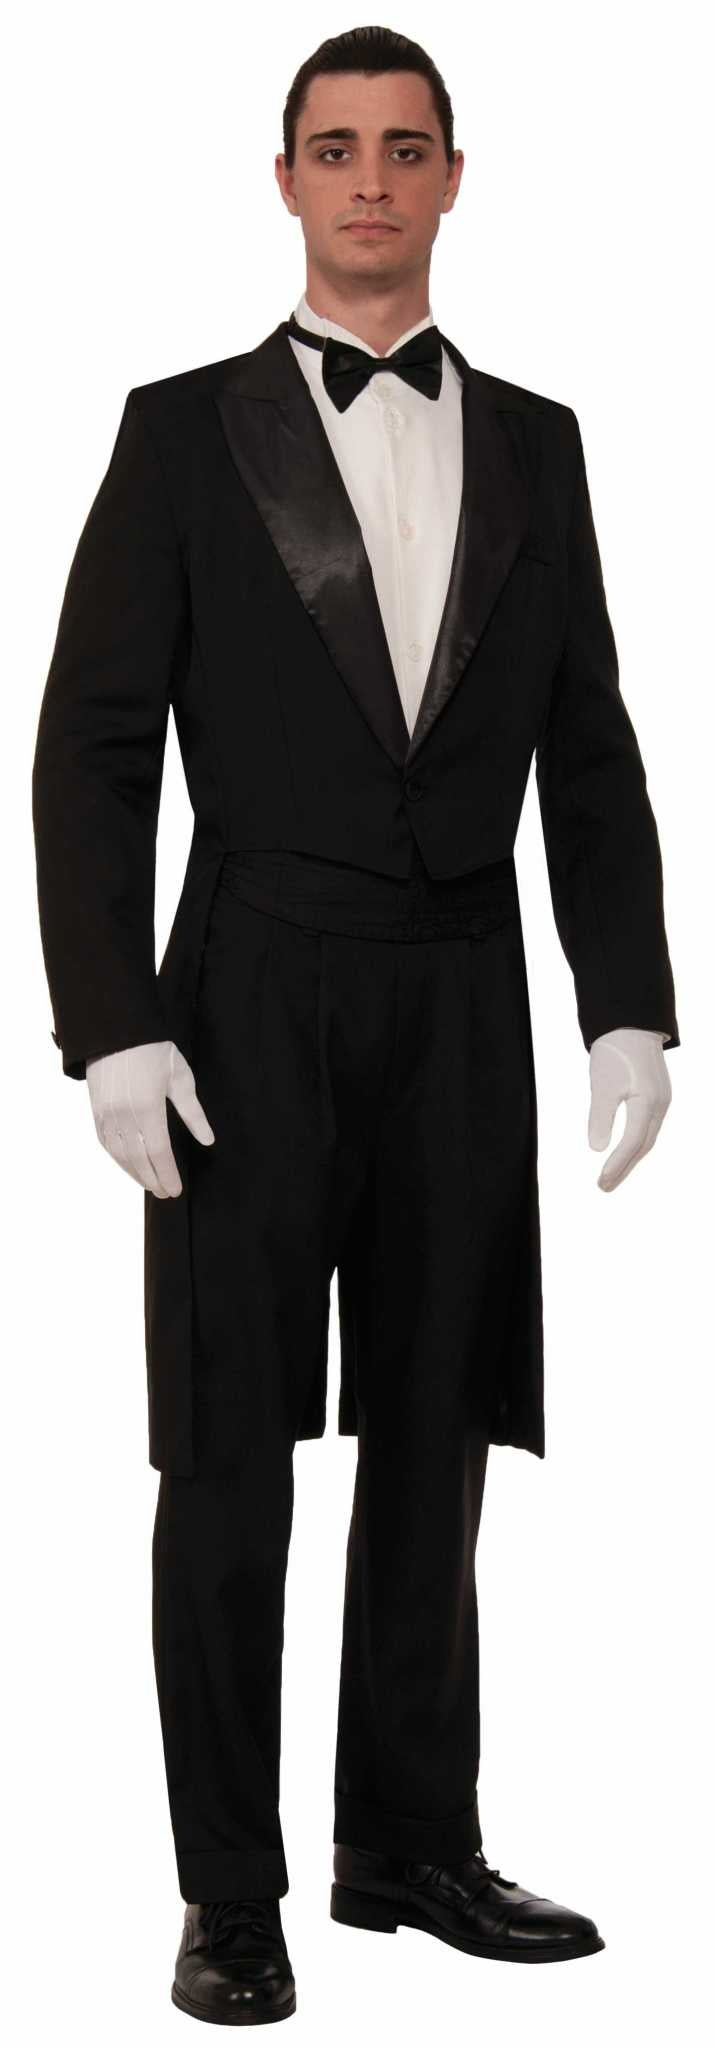 Adult Formal Tuxedo Tailcoat Costume